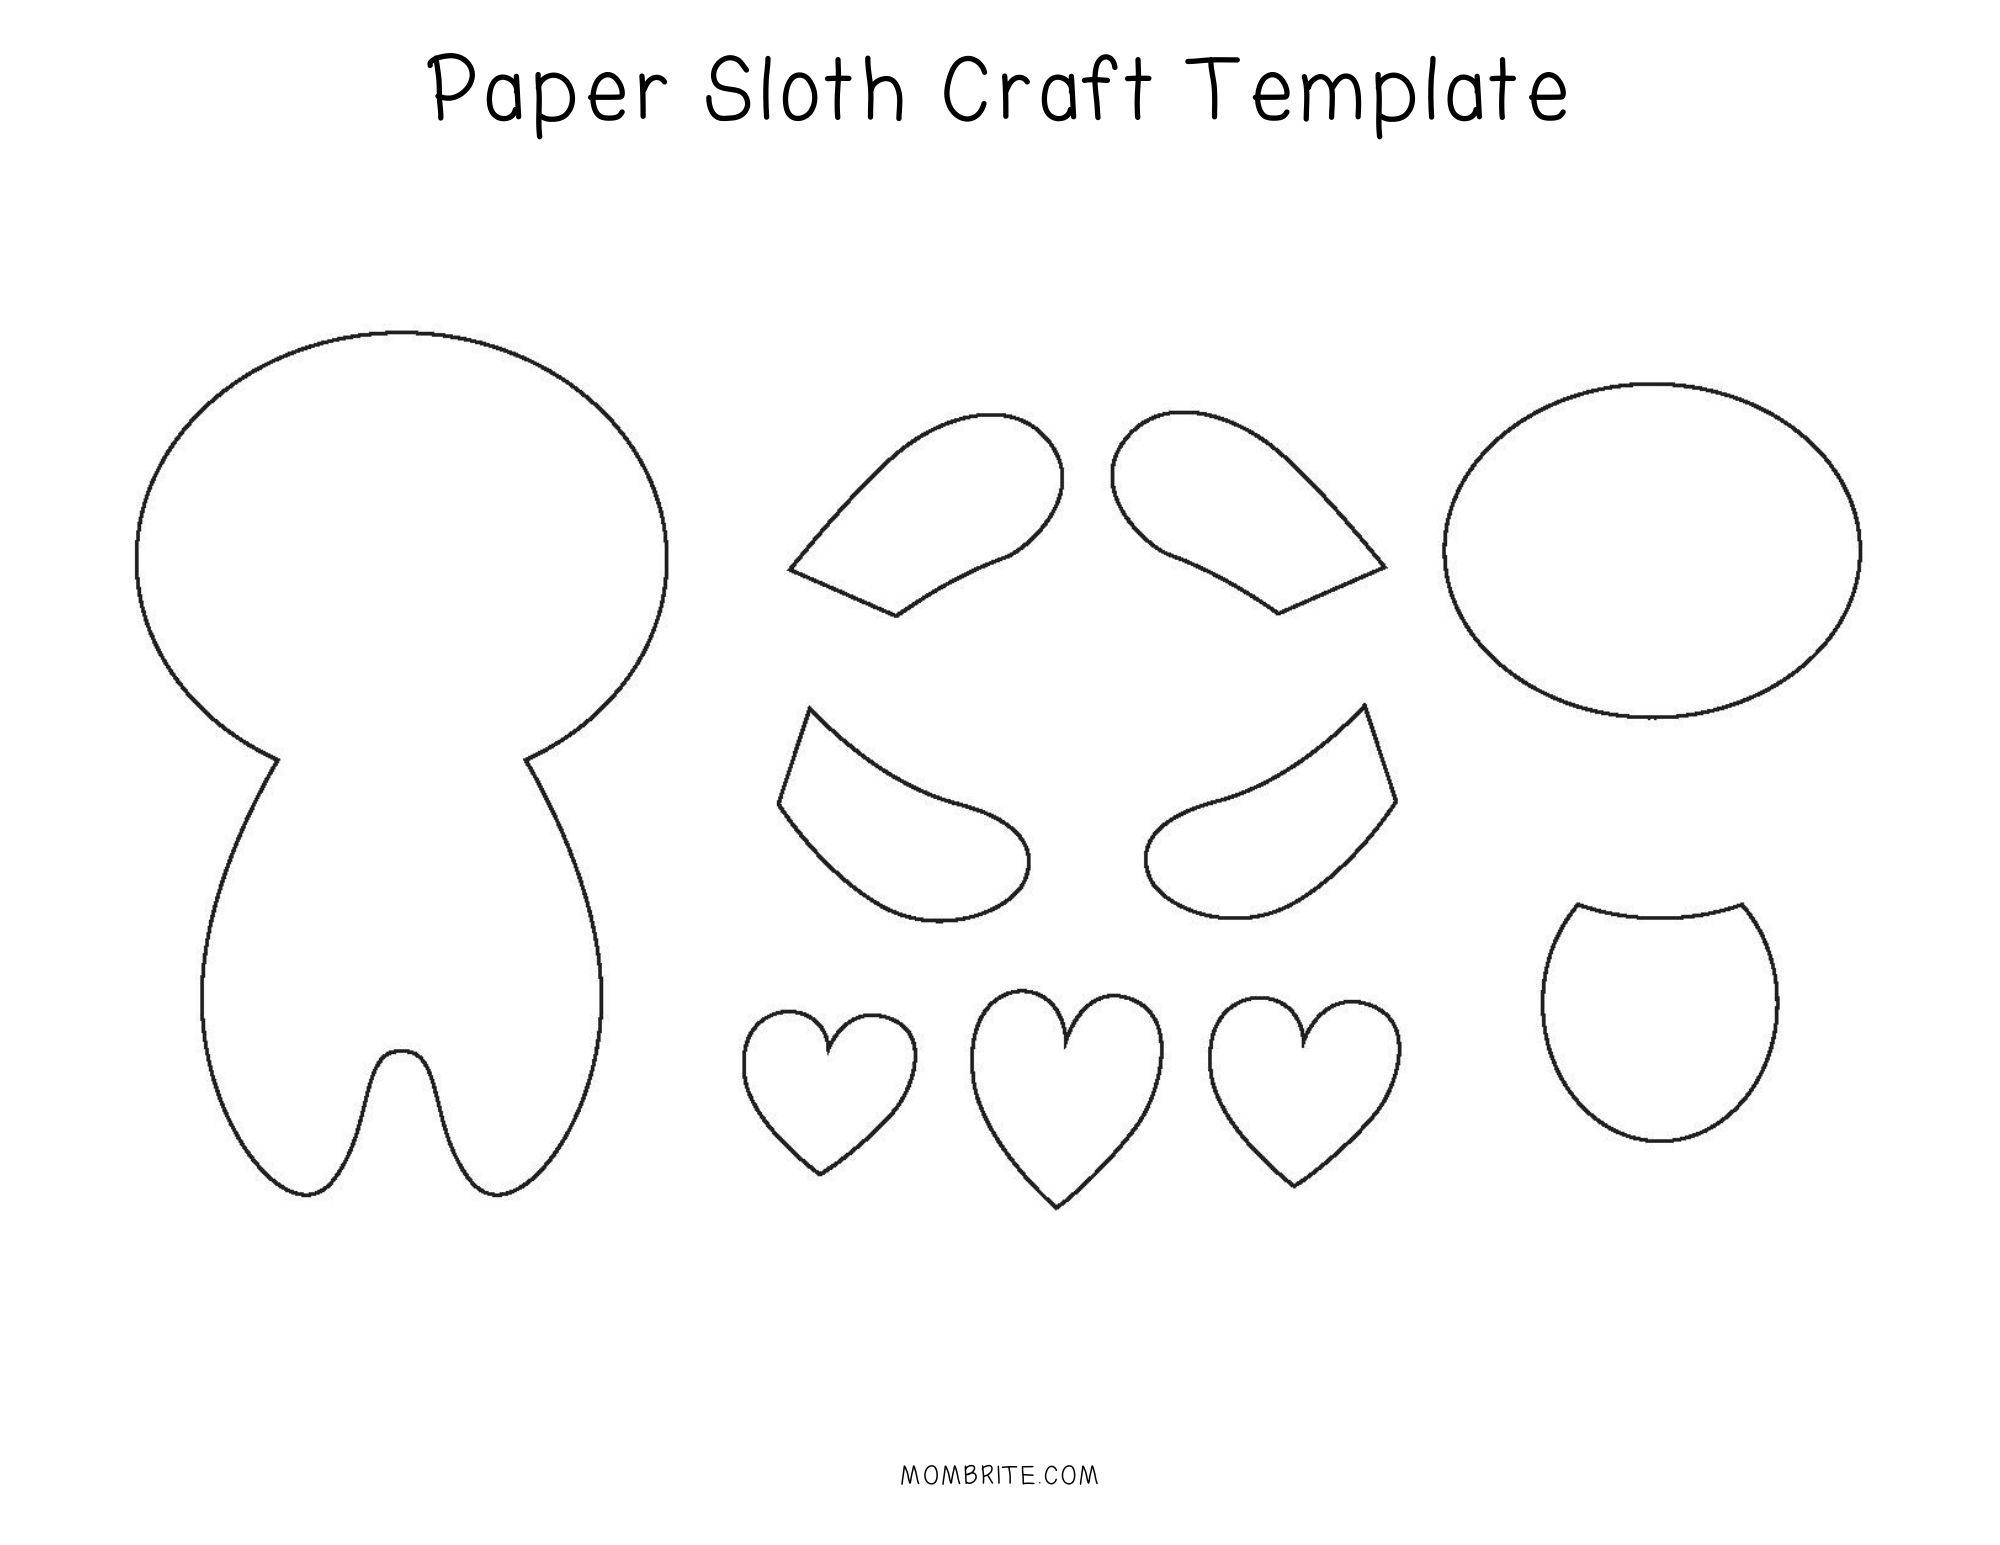 Free Paper Sloth Craft